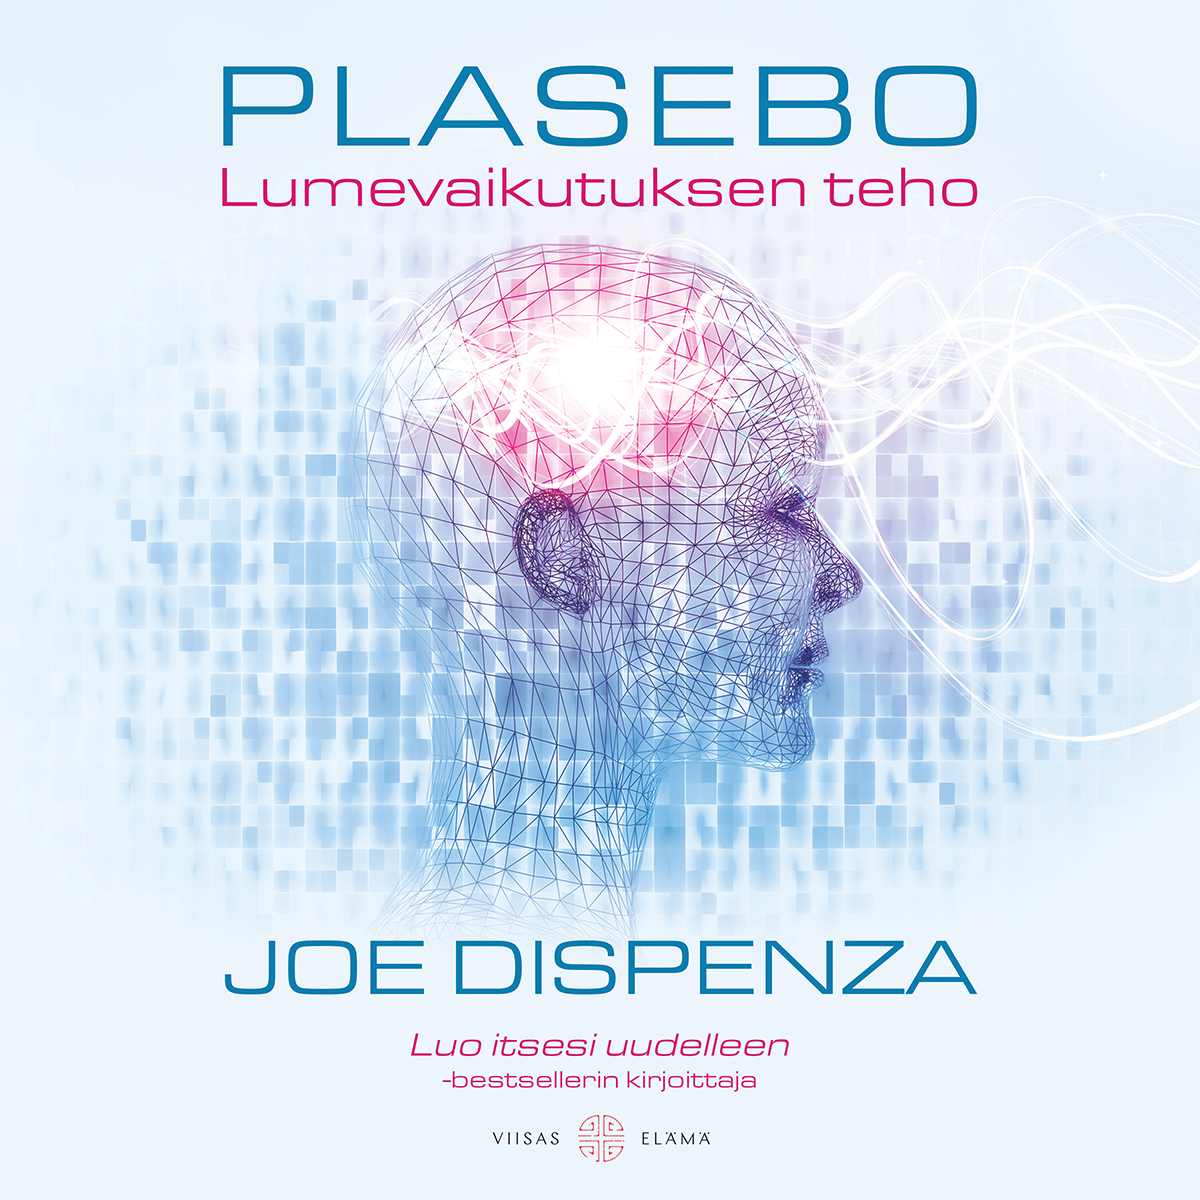 Dispenza, Joe - Plasebo meditaatio, audiobook